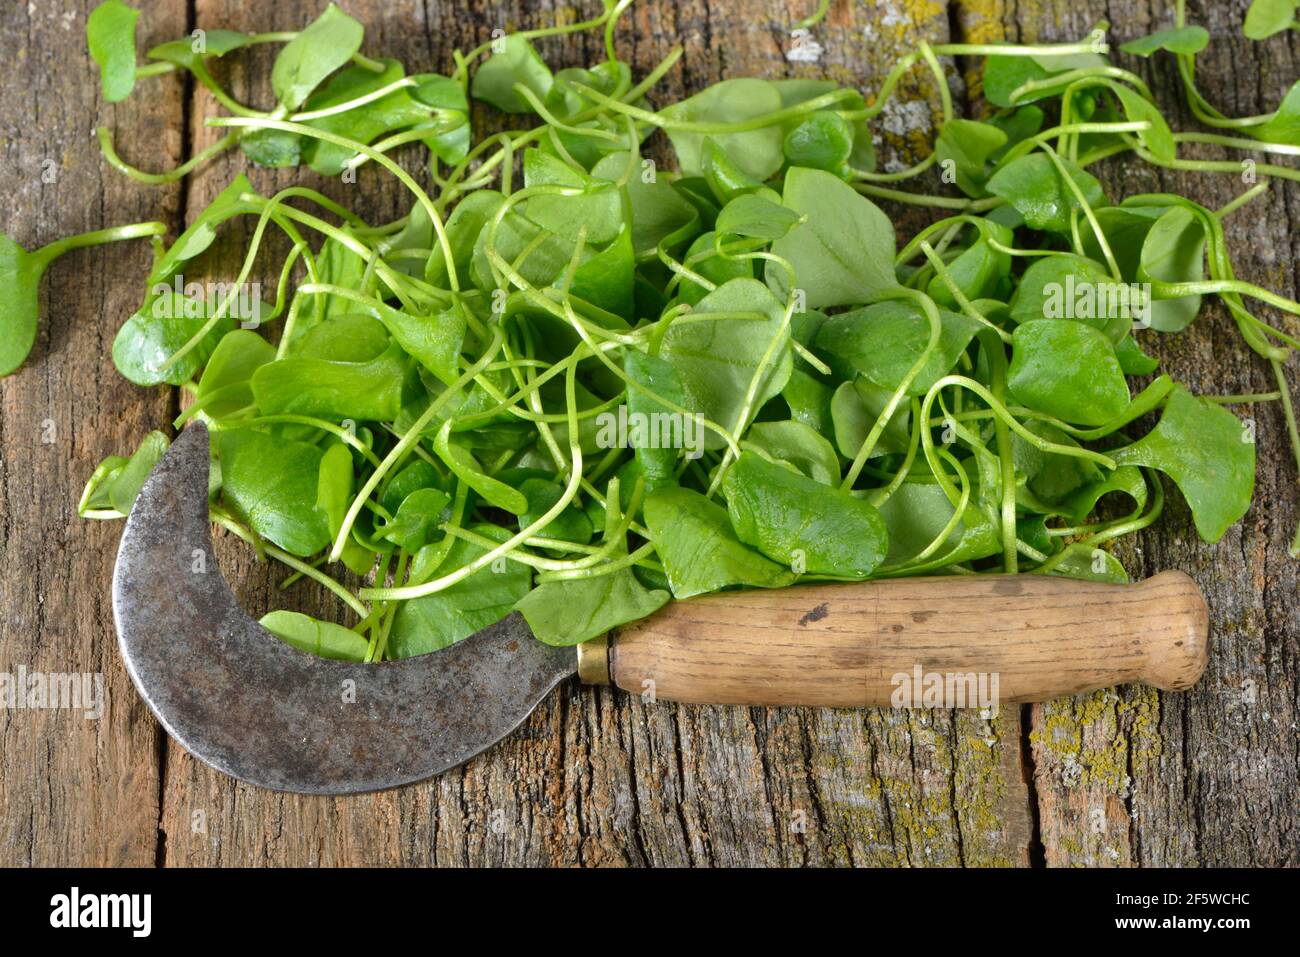 Winter purslane, common plate herb, Cuban spinach, Postelein, miner's lettuceelein (Claytonia perfoliata) Stock Photo